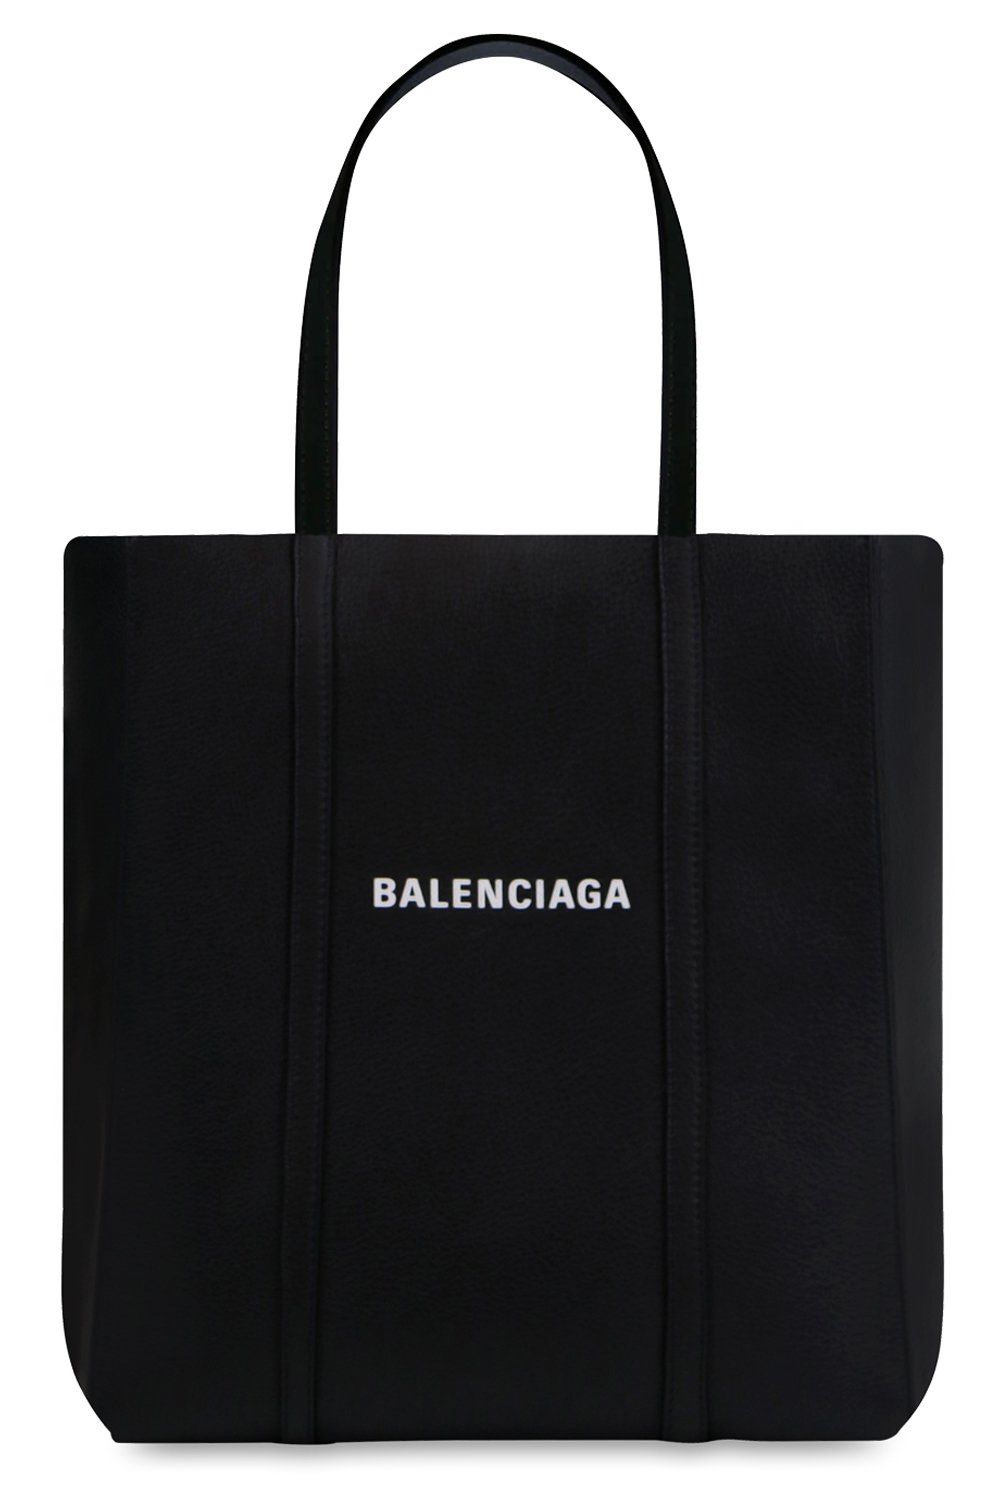 BALENCIAGA BAGS BLACK EVERYDAY SMALL TOTE BAG | BLACK